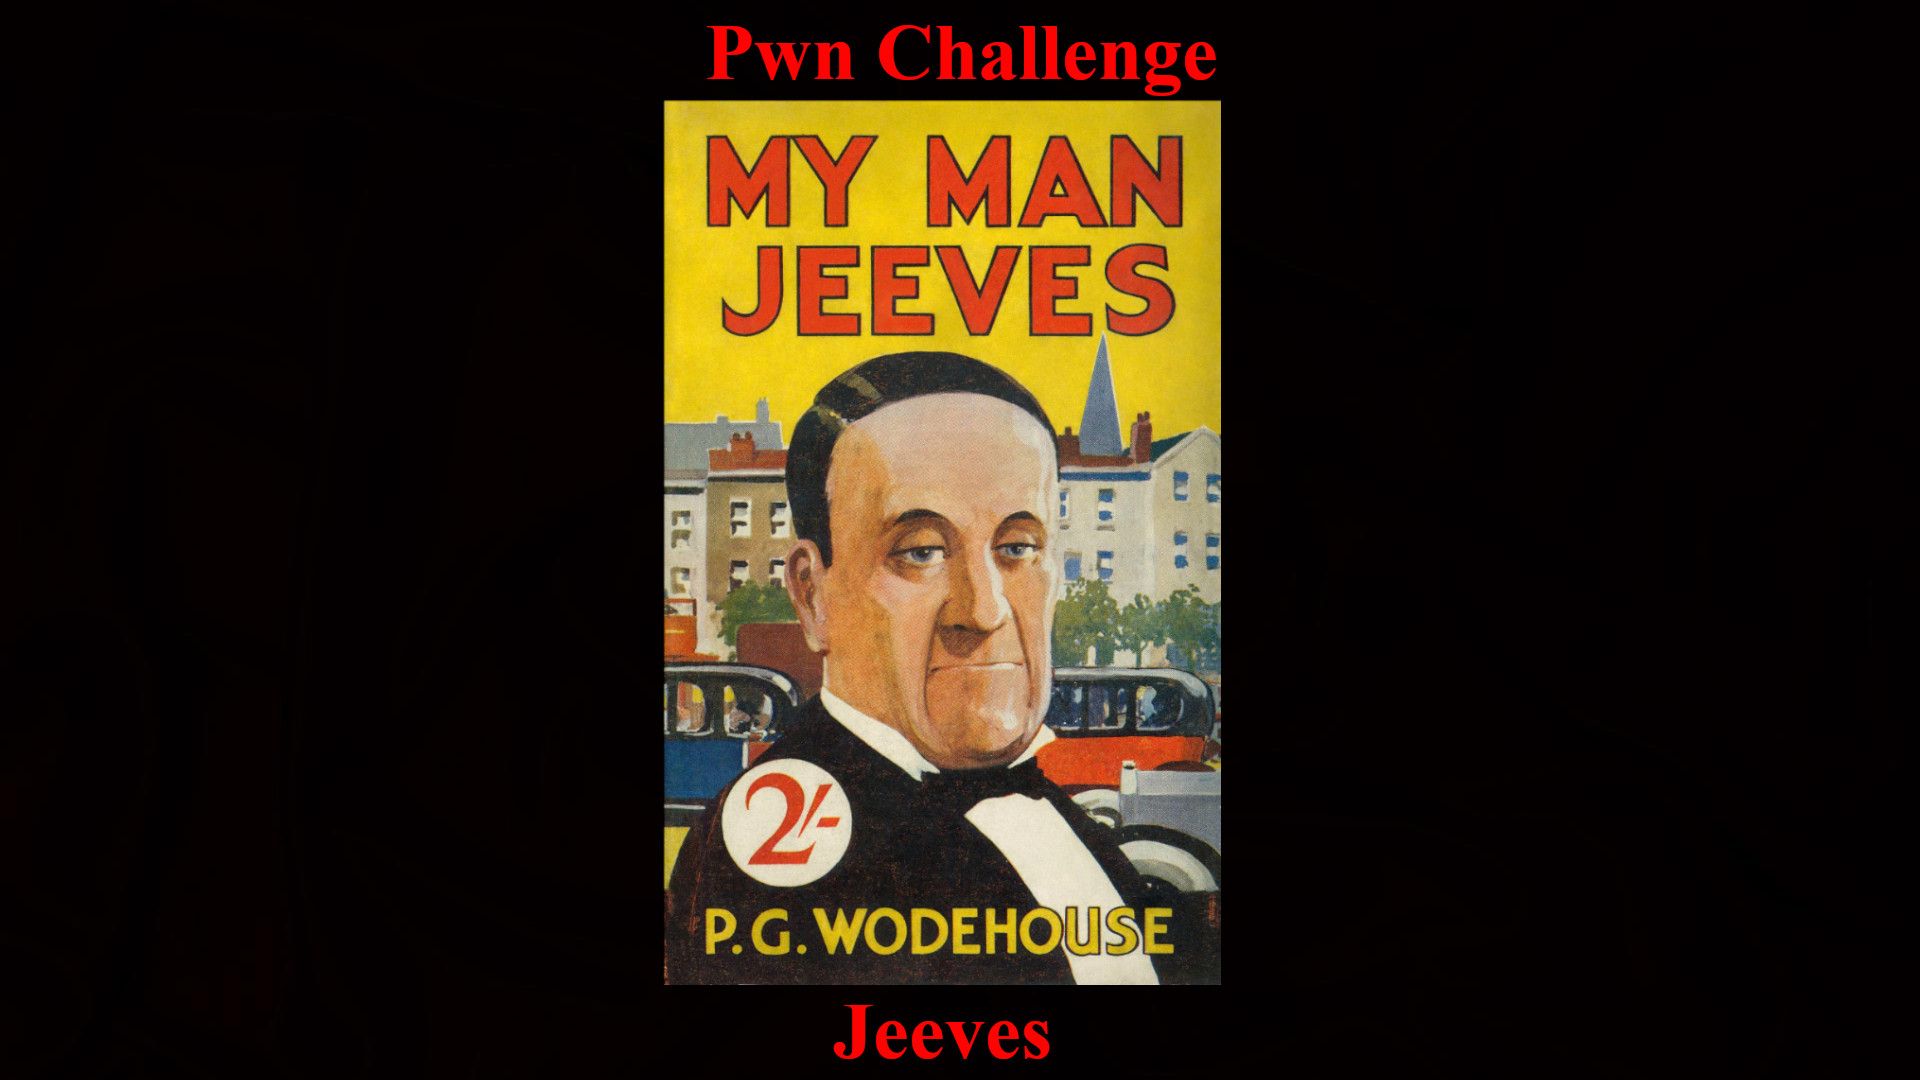 Pwn Challenge - Jeeves